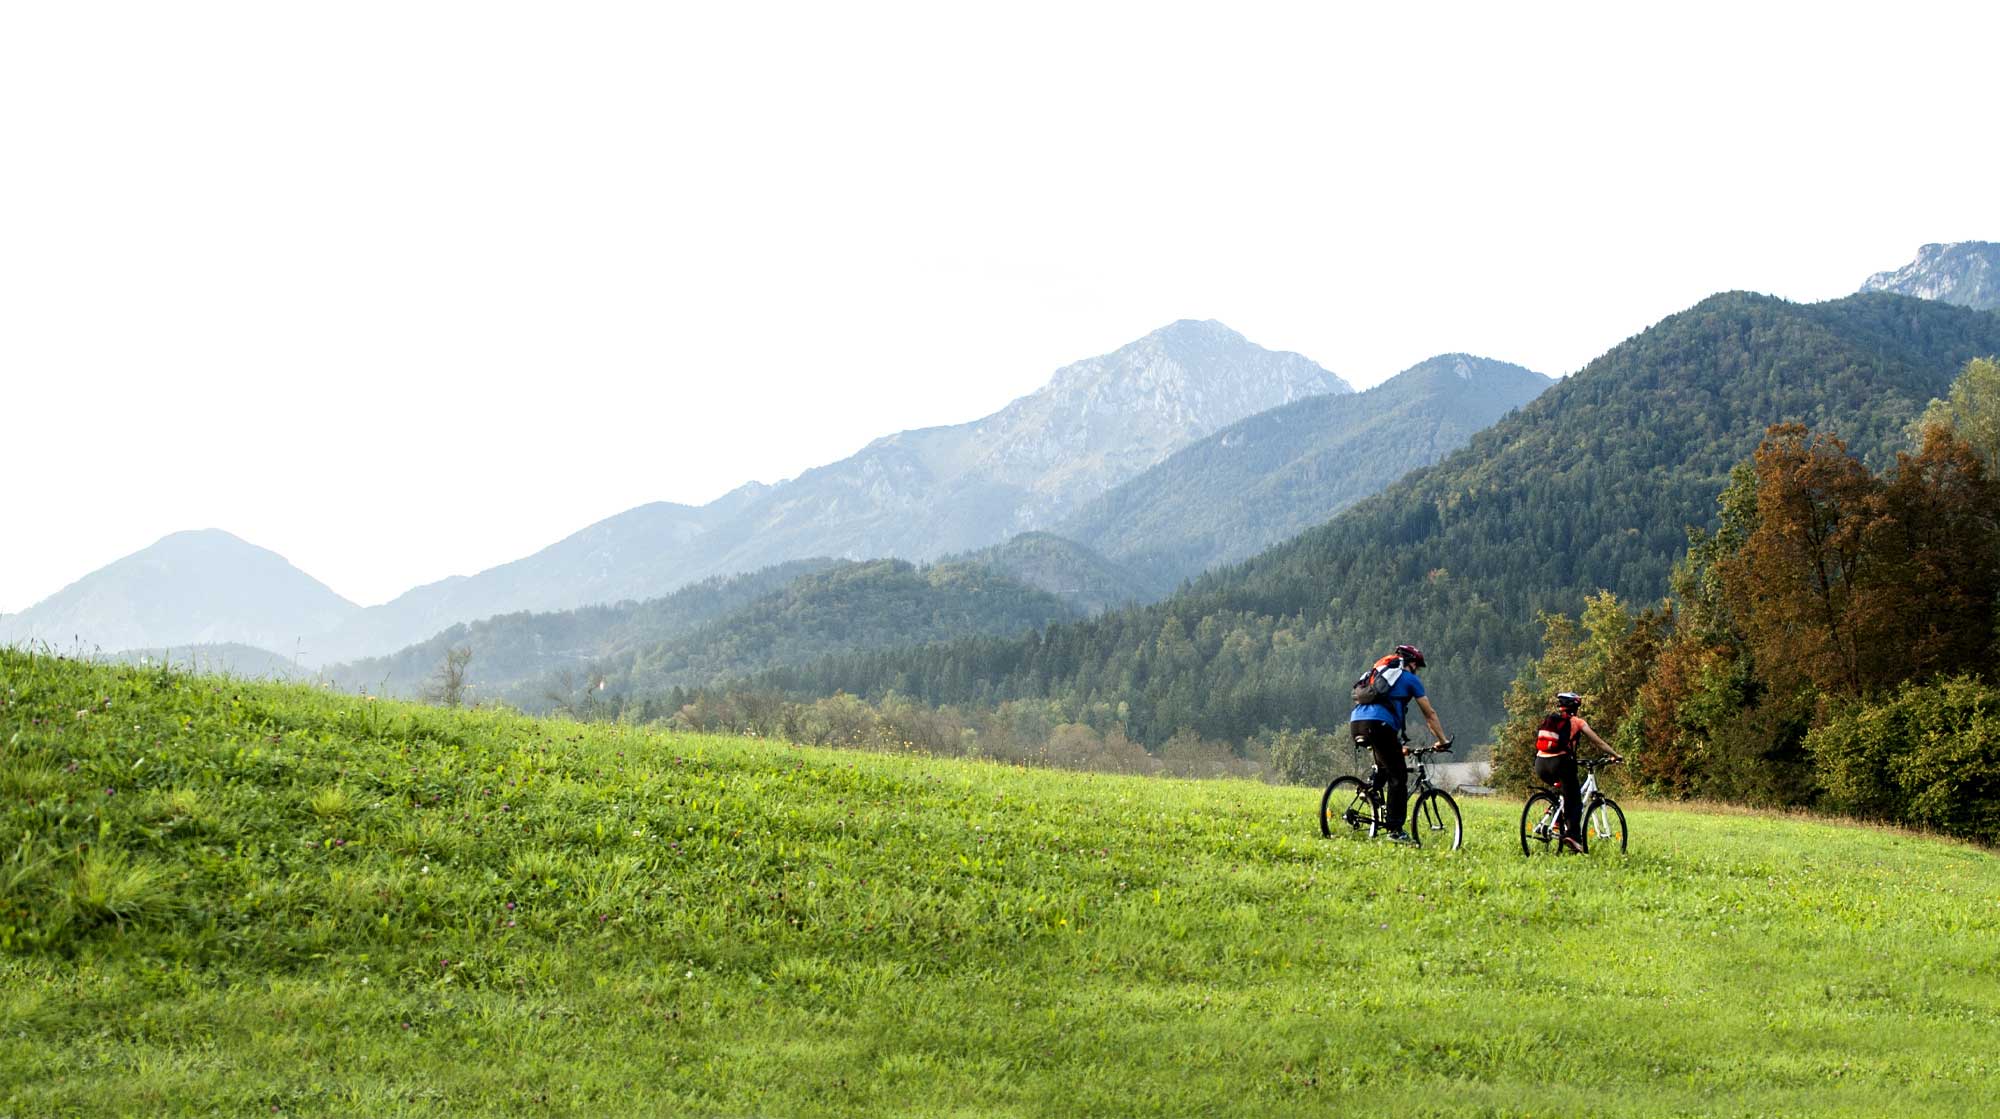 two people riding bikes through a grassy mountain valley